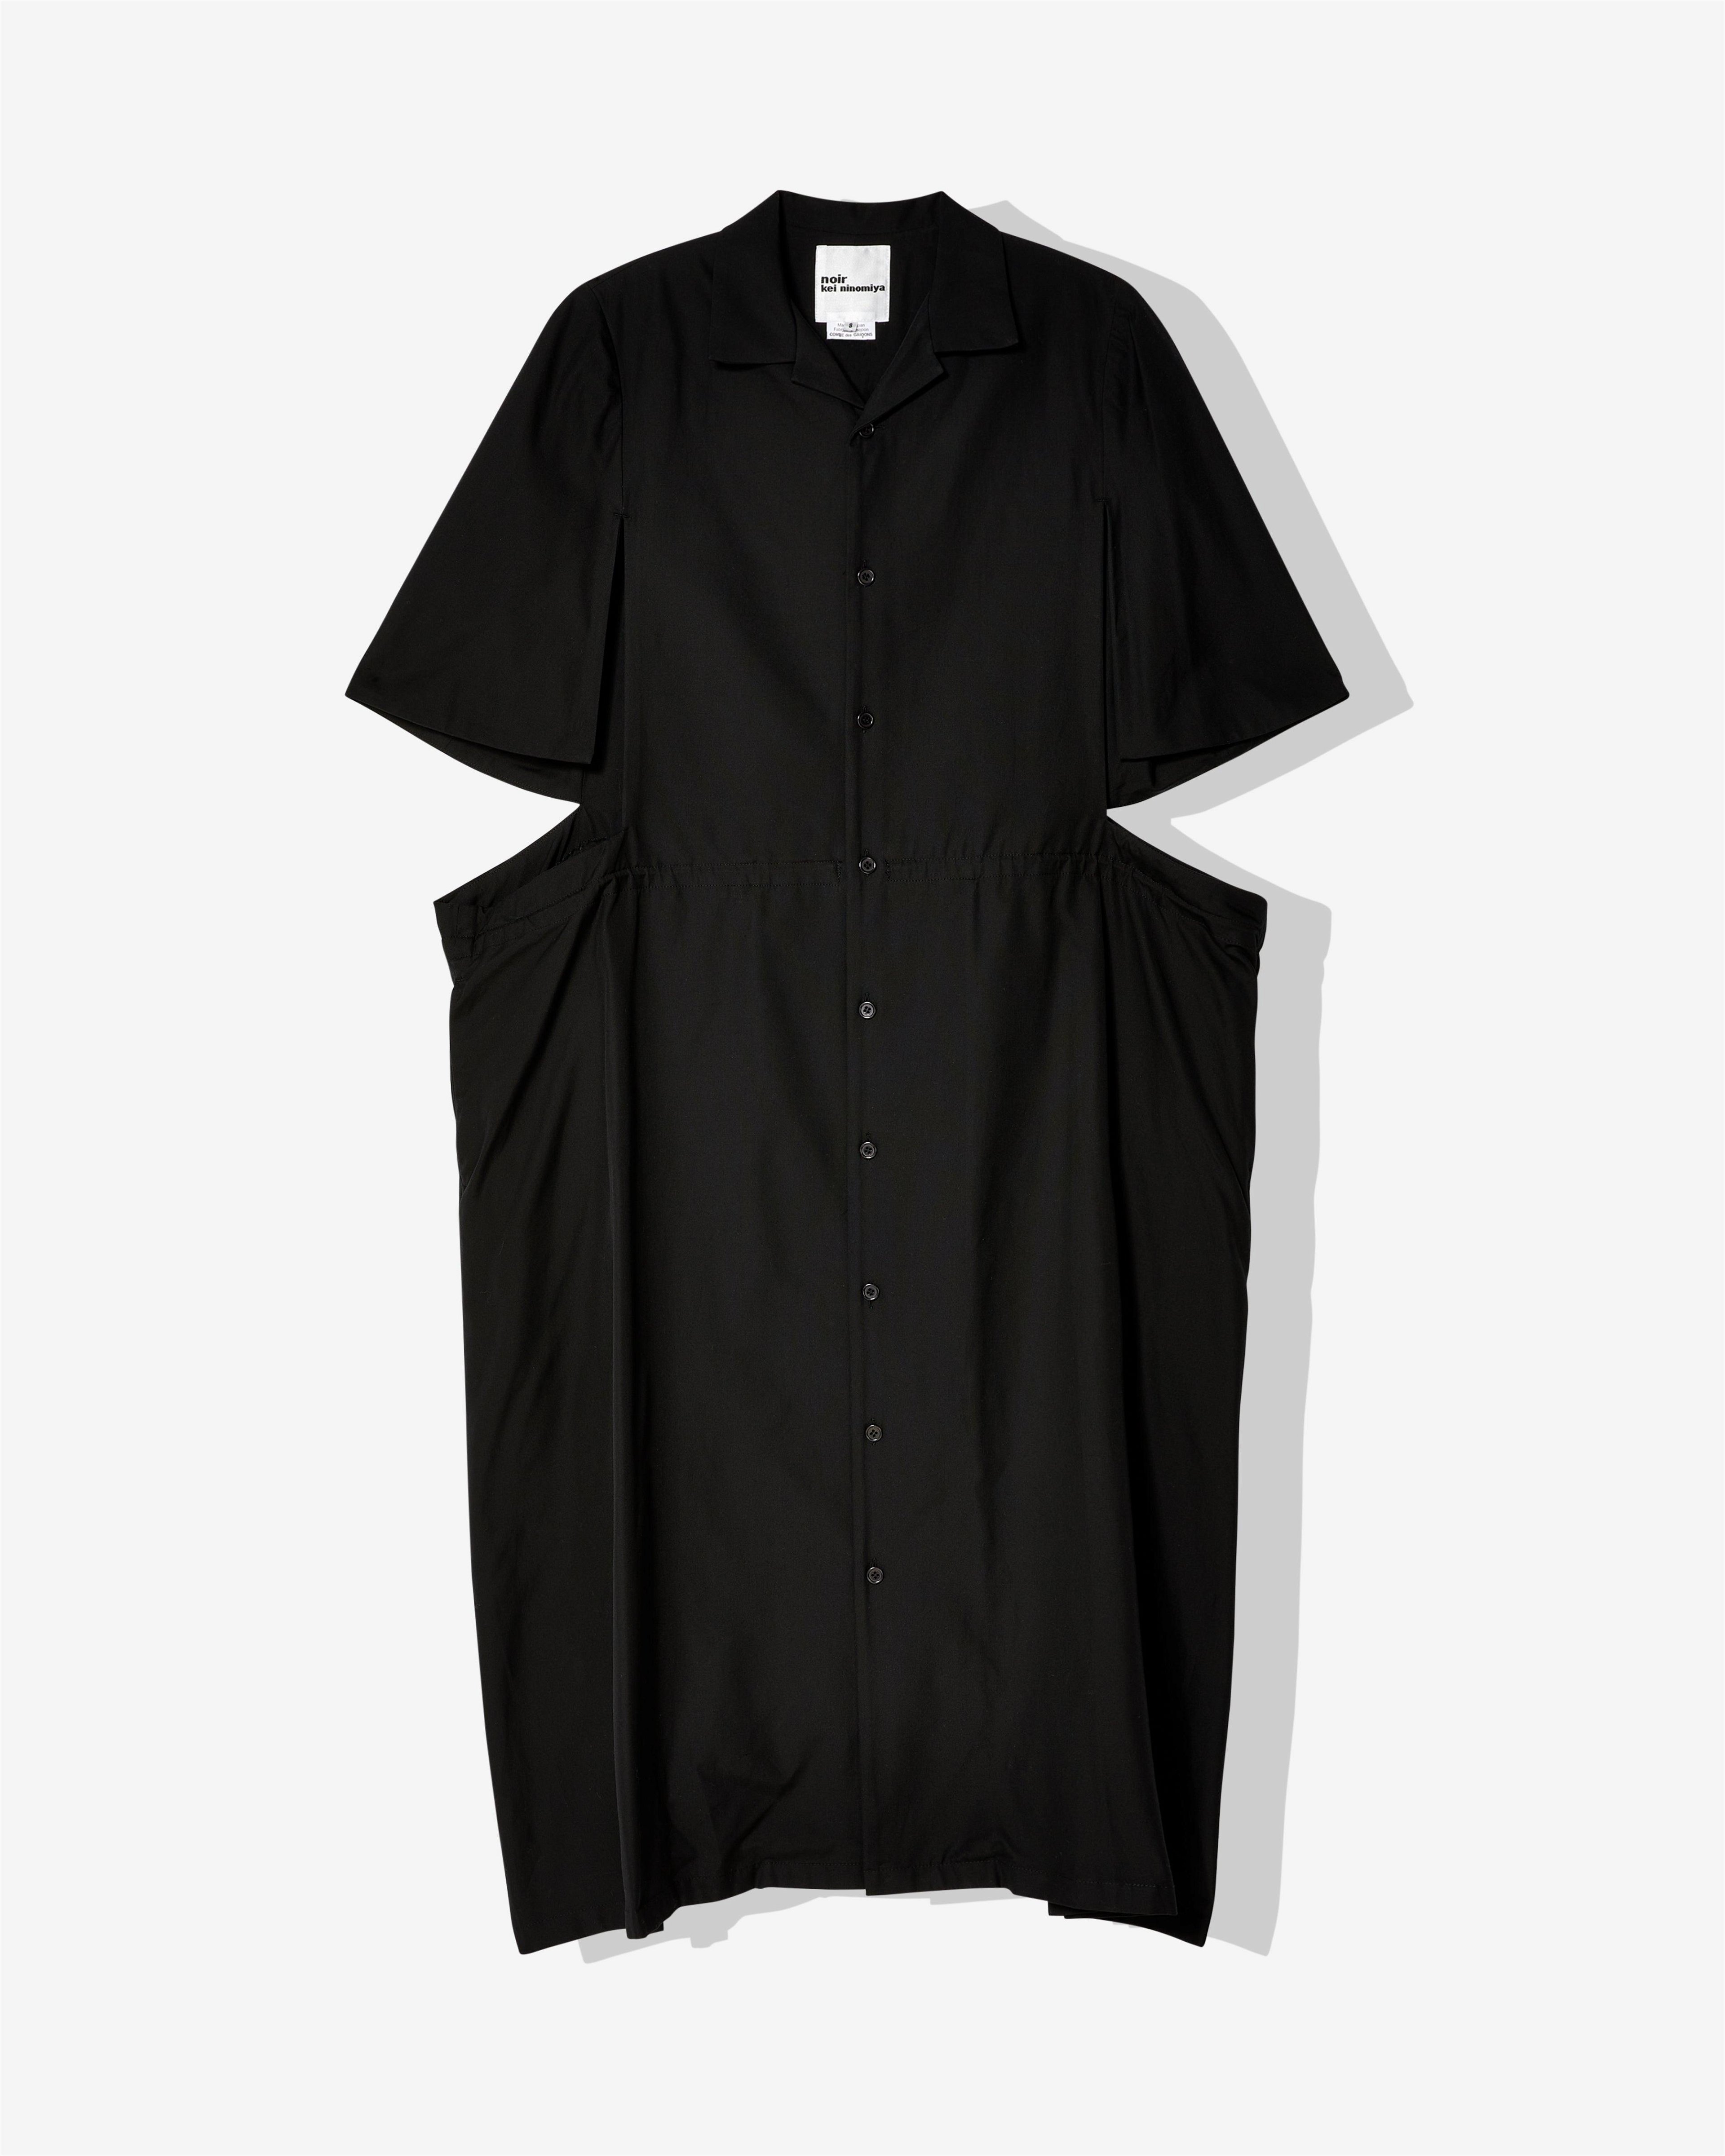 Noir Kei Ninomiya - Women's Short Sleeve Dress - (Black) by NOIR KEI NINOMIYA